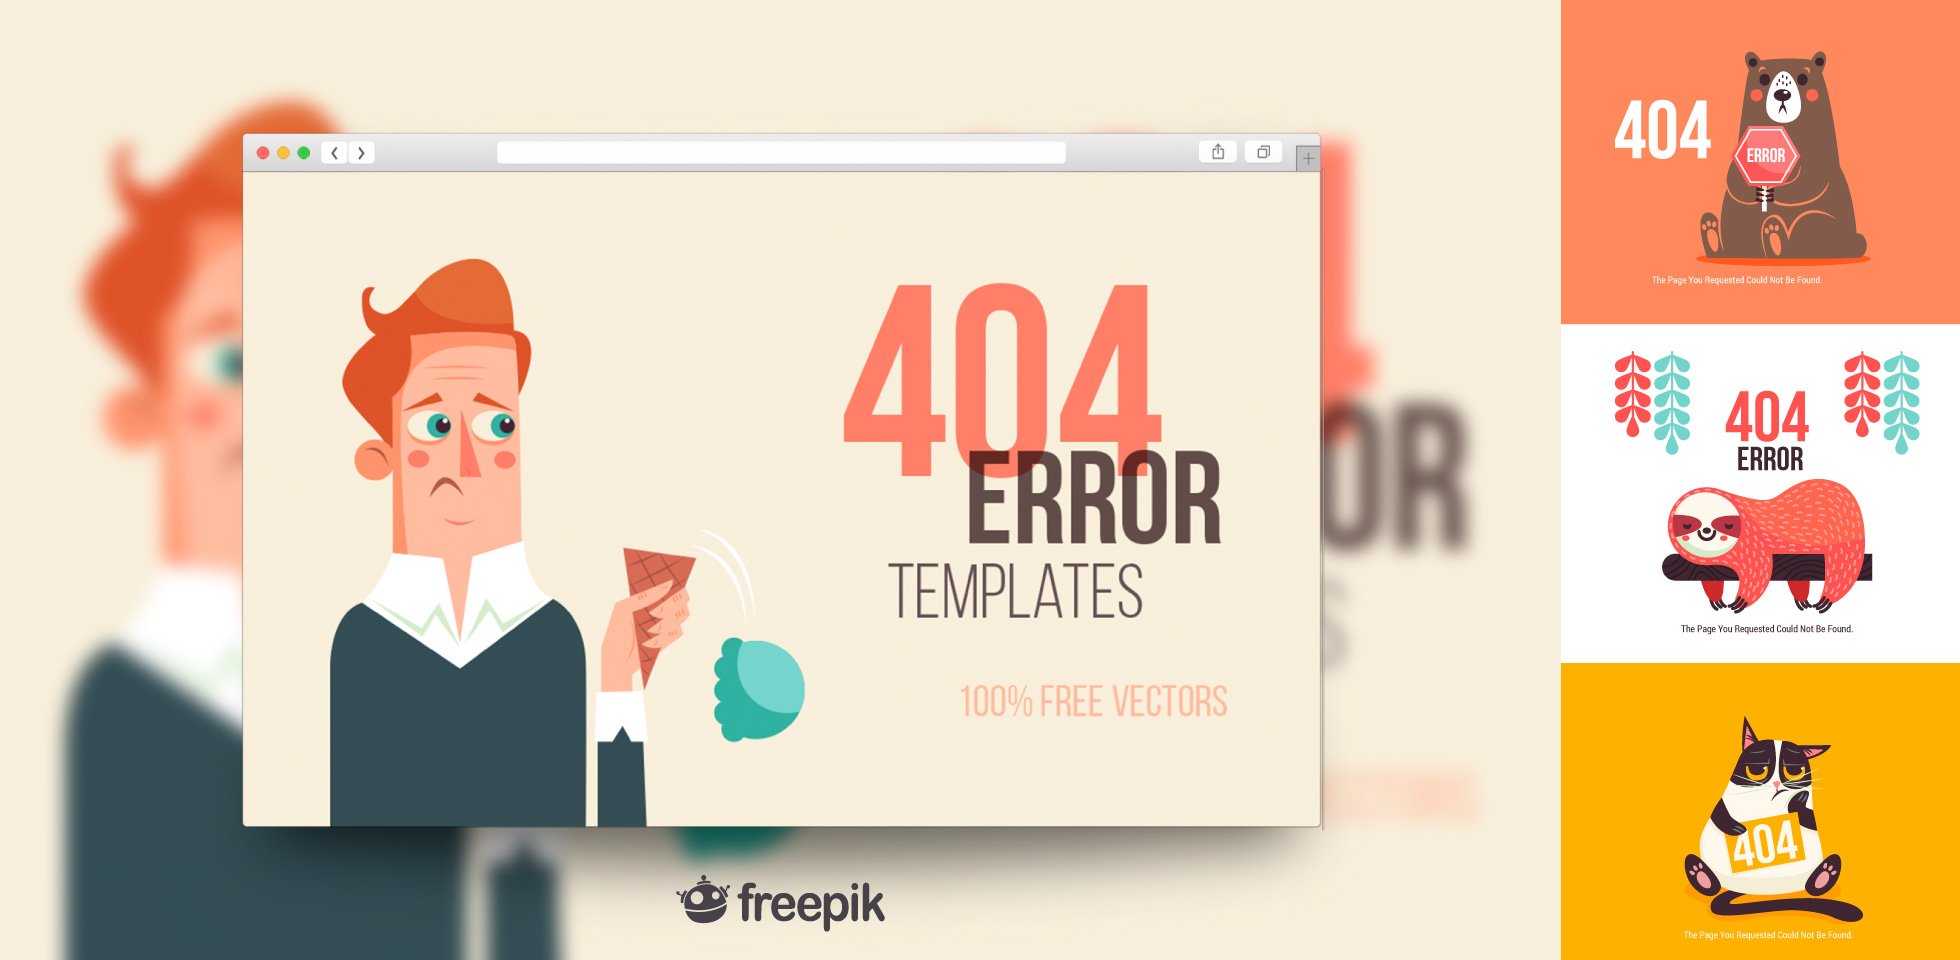 Free Download: 404 Error Templates